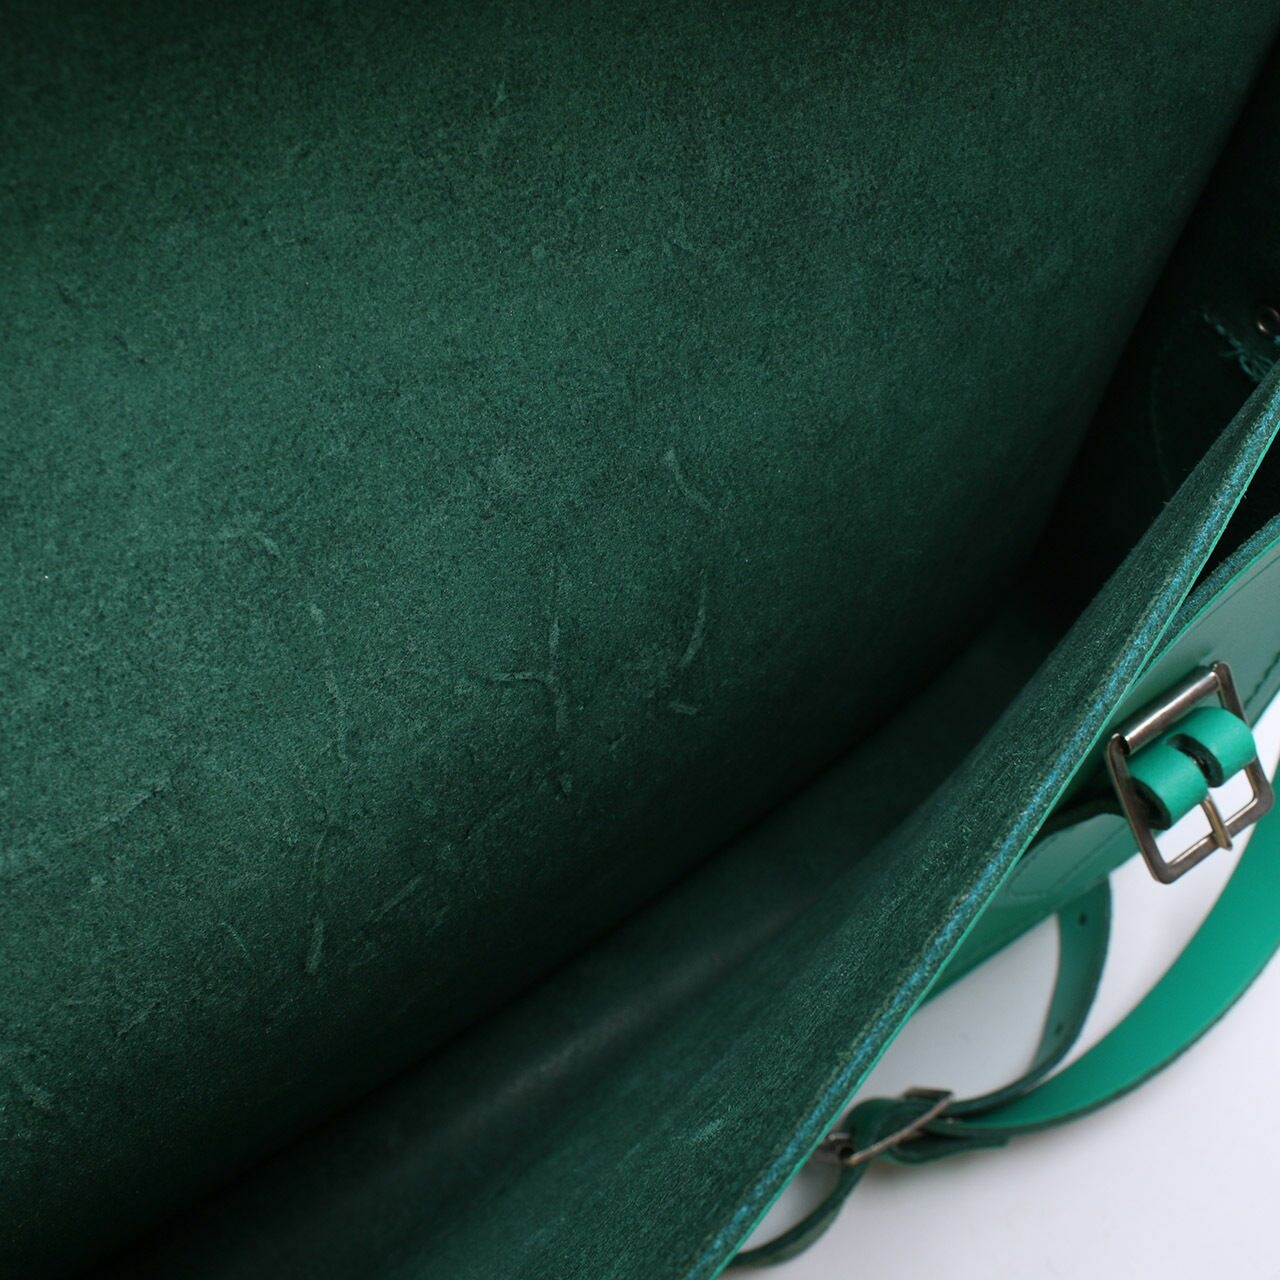 The Cambridge Satchel Company Green Sling Bag